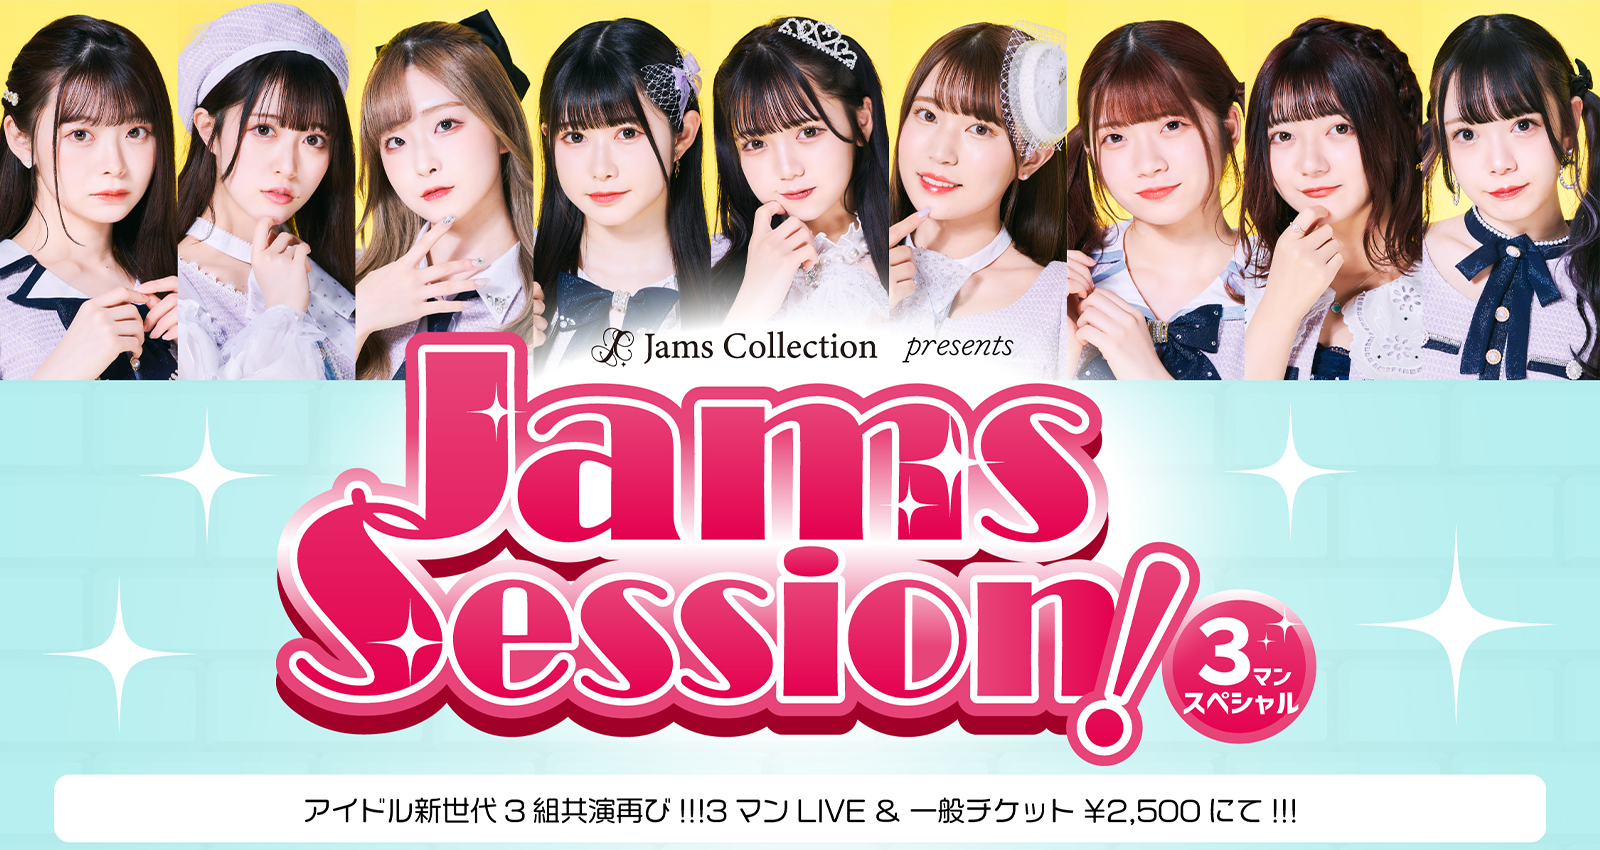 JamsCollection presents 『ジャムズセッション-3マンスペシャル-』